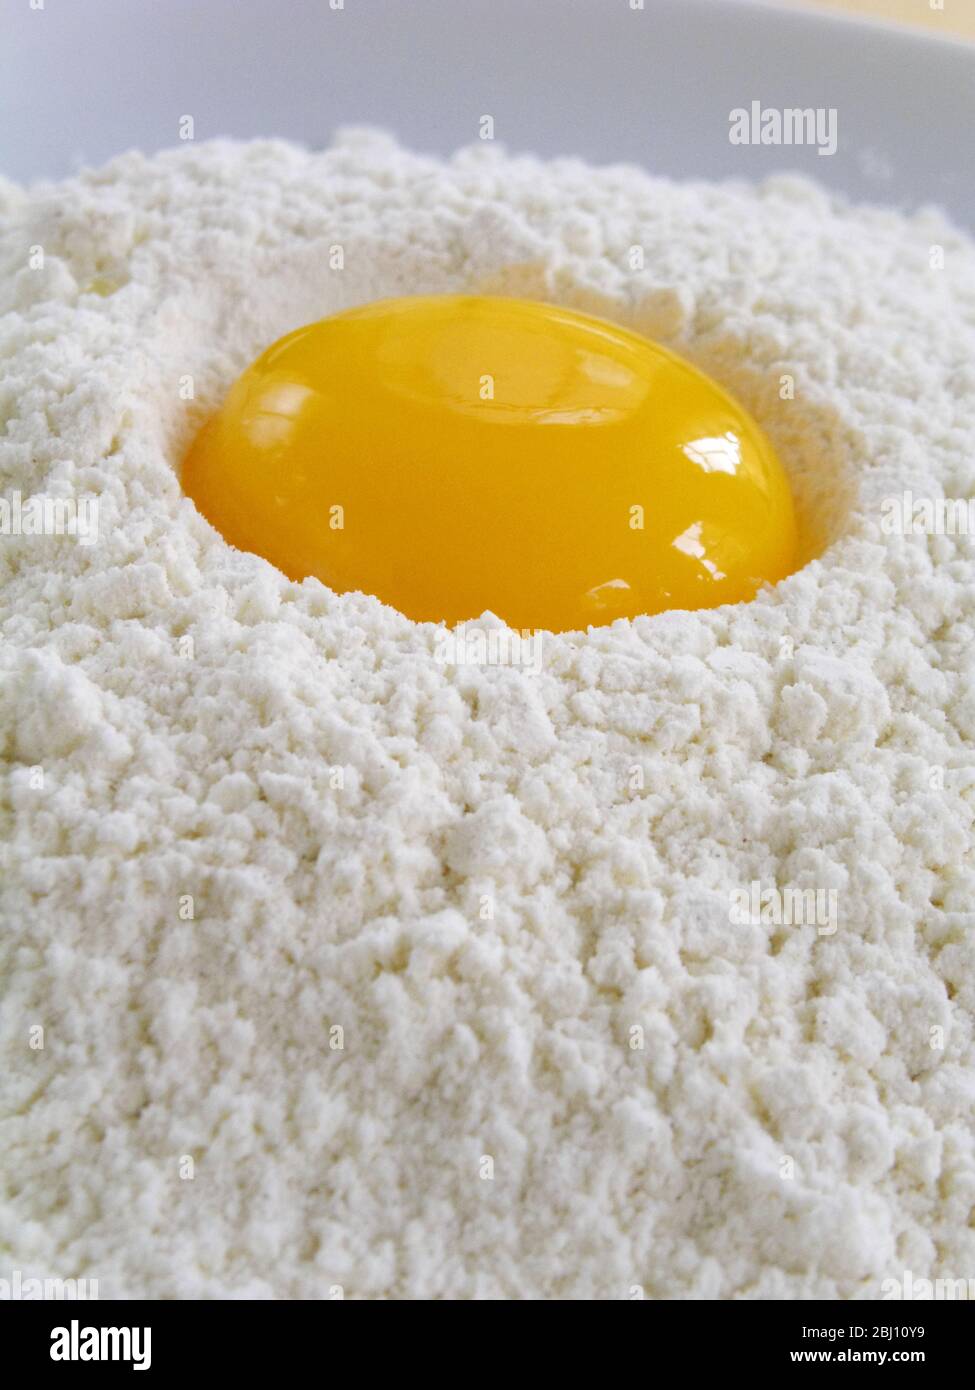 A whole egg yolk broken into a pile of sifted flour - Stock Photo